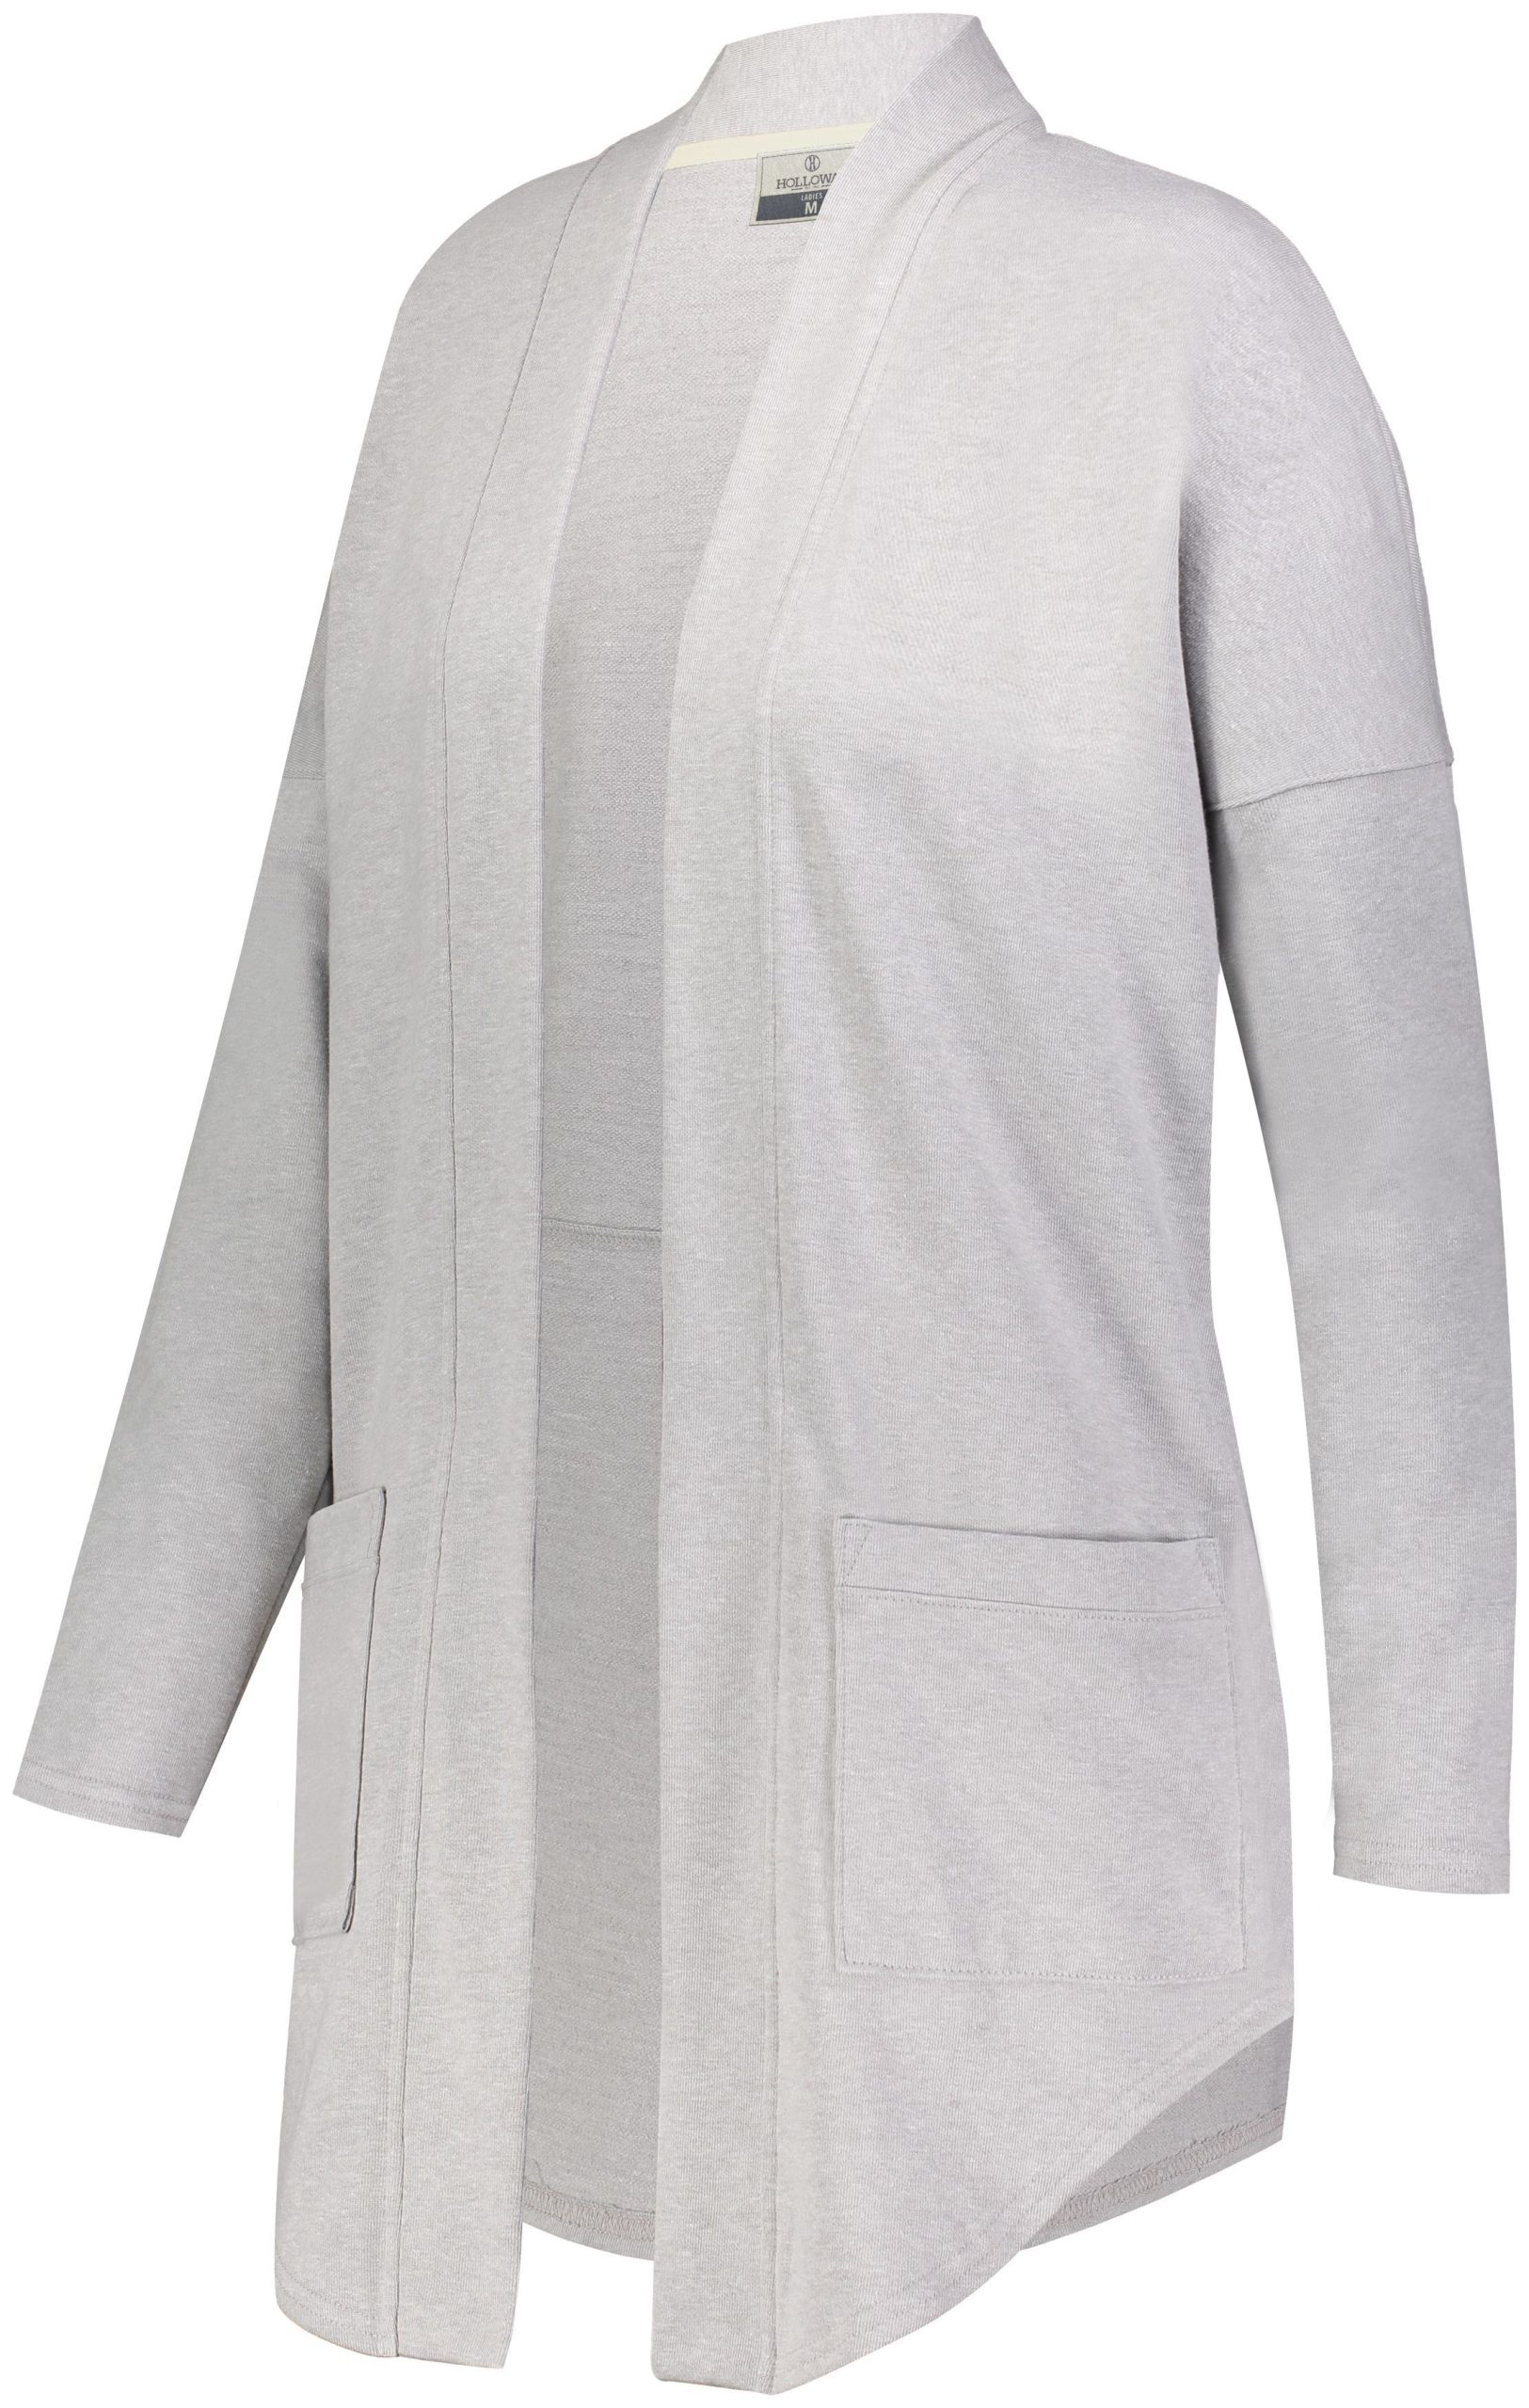 Ladies Athletic Sweater, Long Sleeve Sophomore Cardigan Top - Outerwear 41